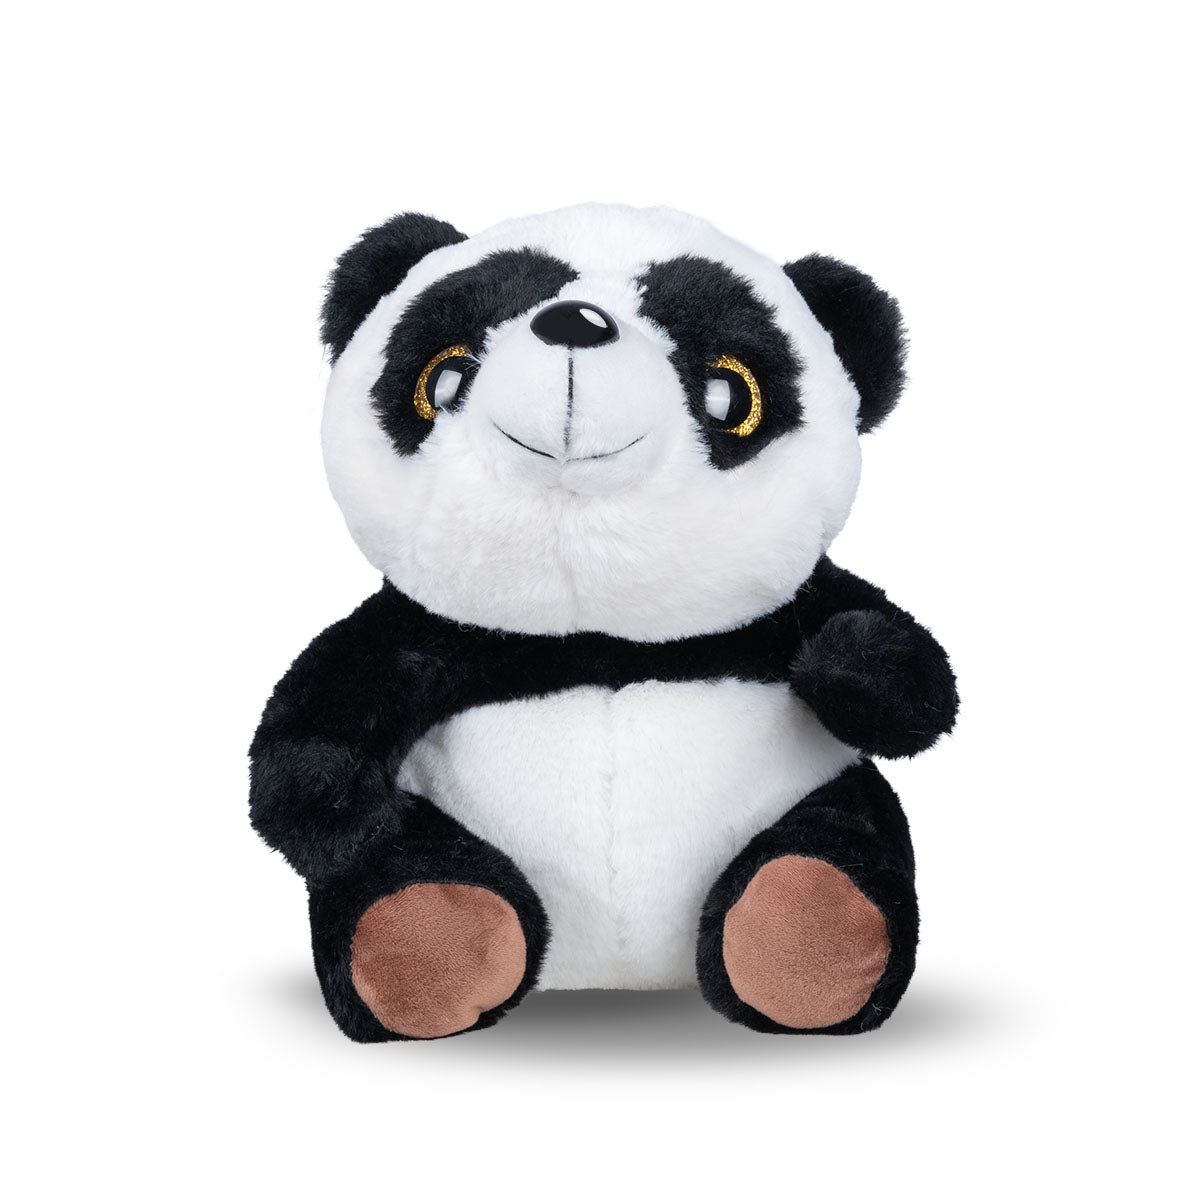 Dryly - weekender - Soft toys - Wizzu Panda bear front.